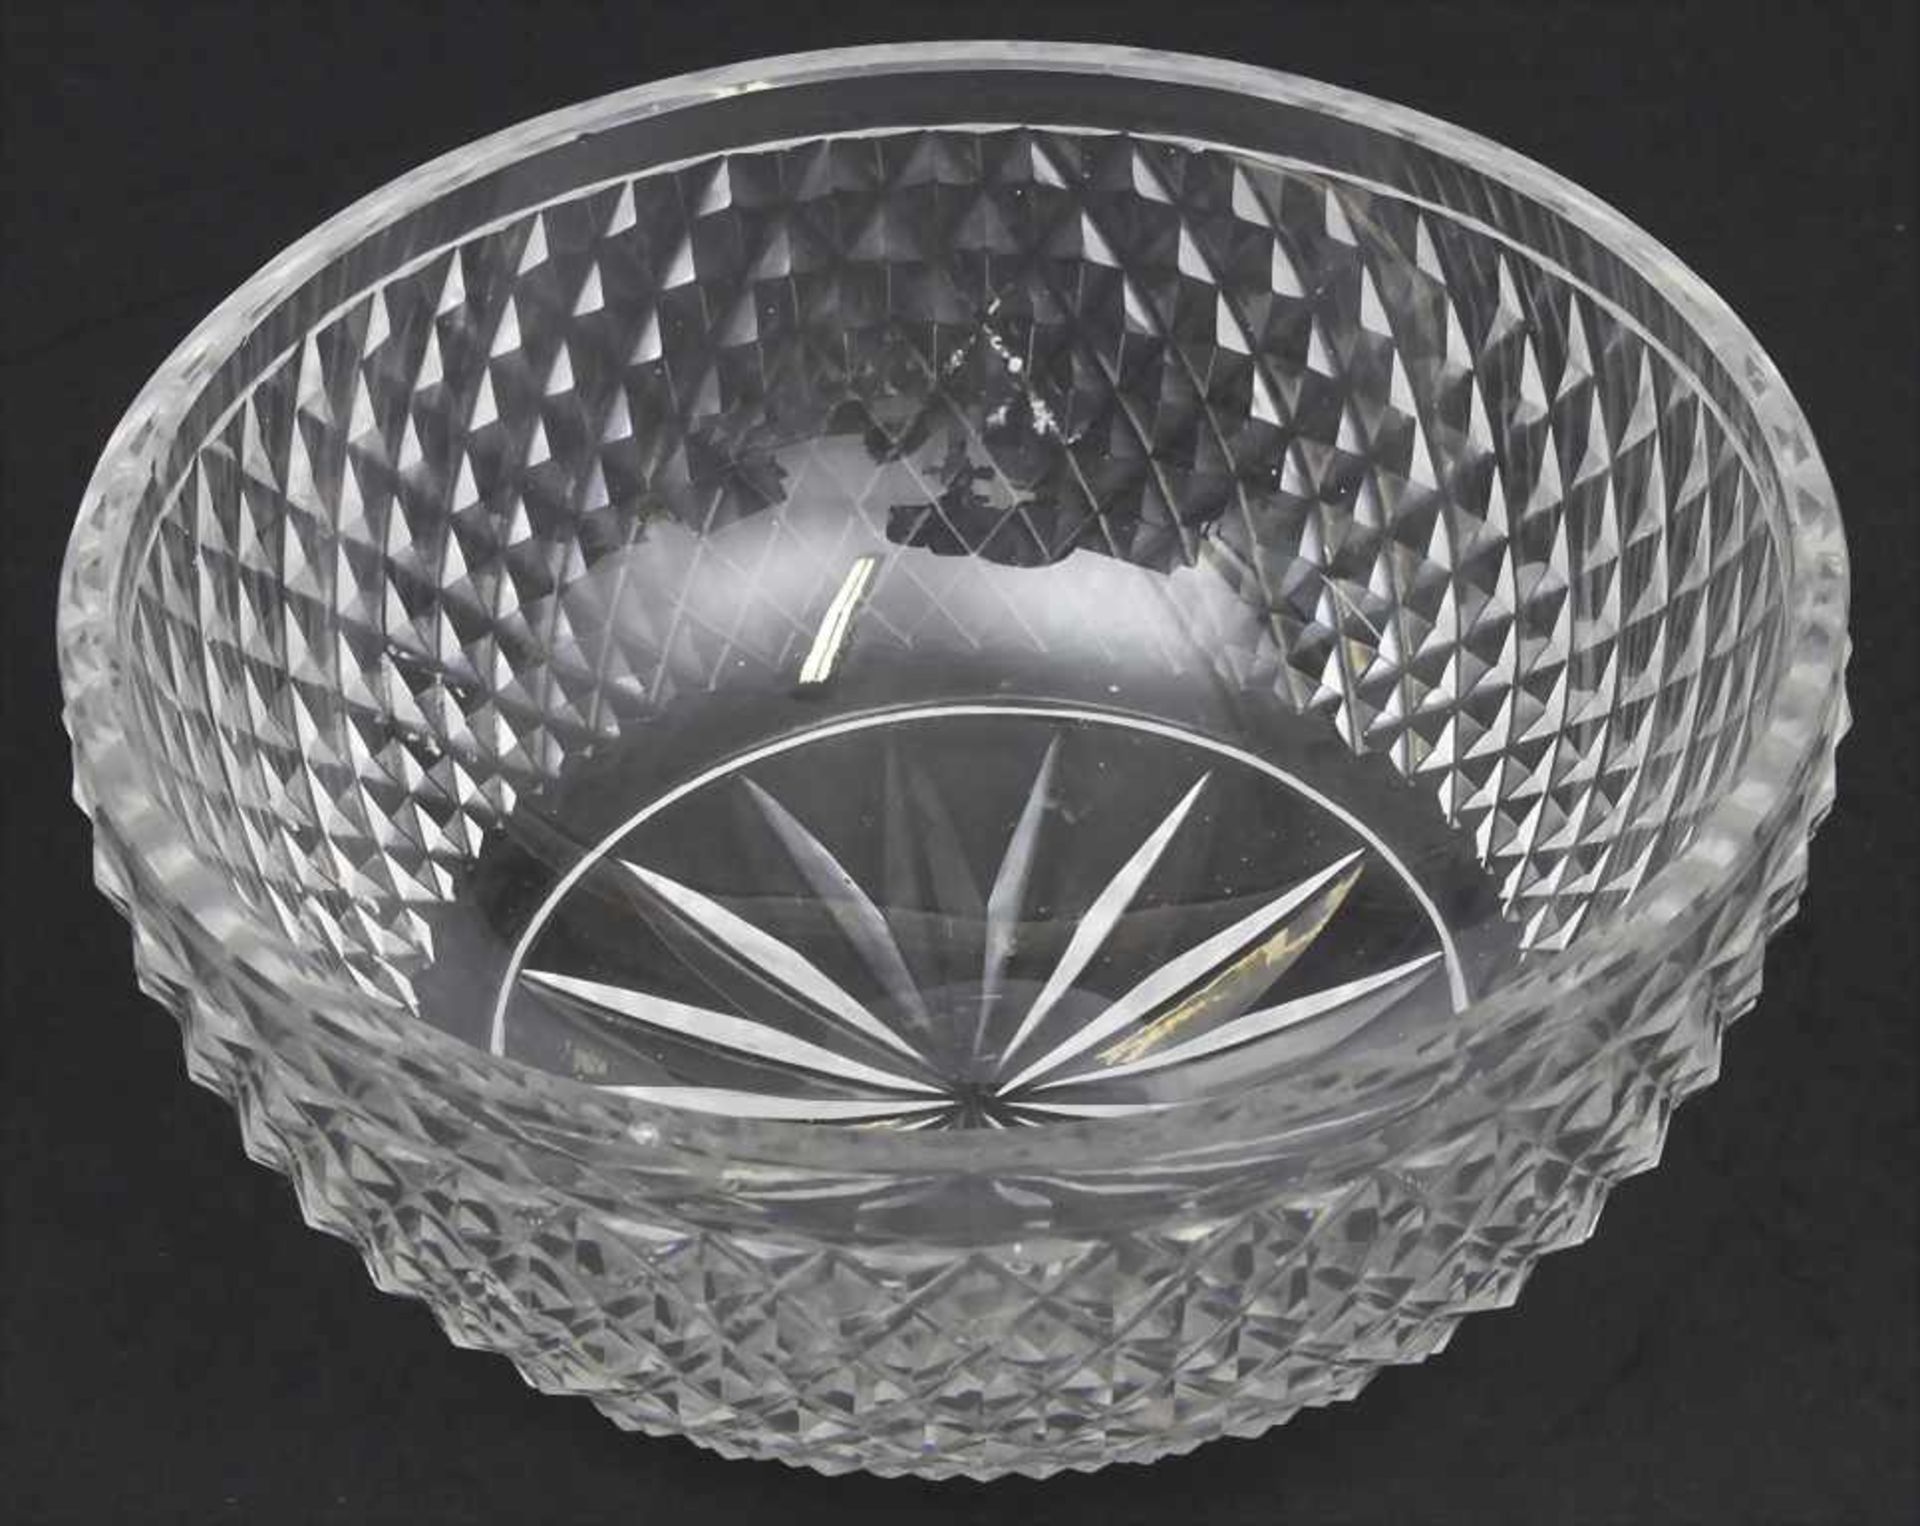 Deckeldose / A lidded silver bowl, Brüssel / Brussels, um 1840Material: Silber 950, mit - Bild 8 aus 11